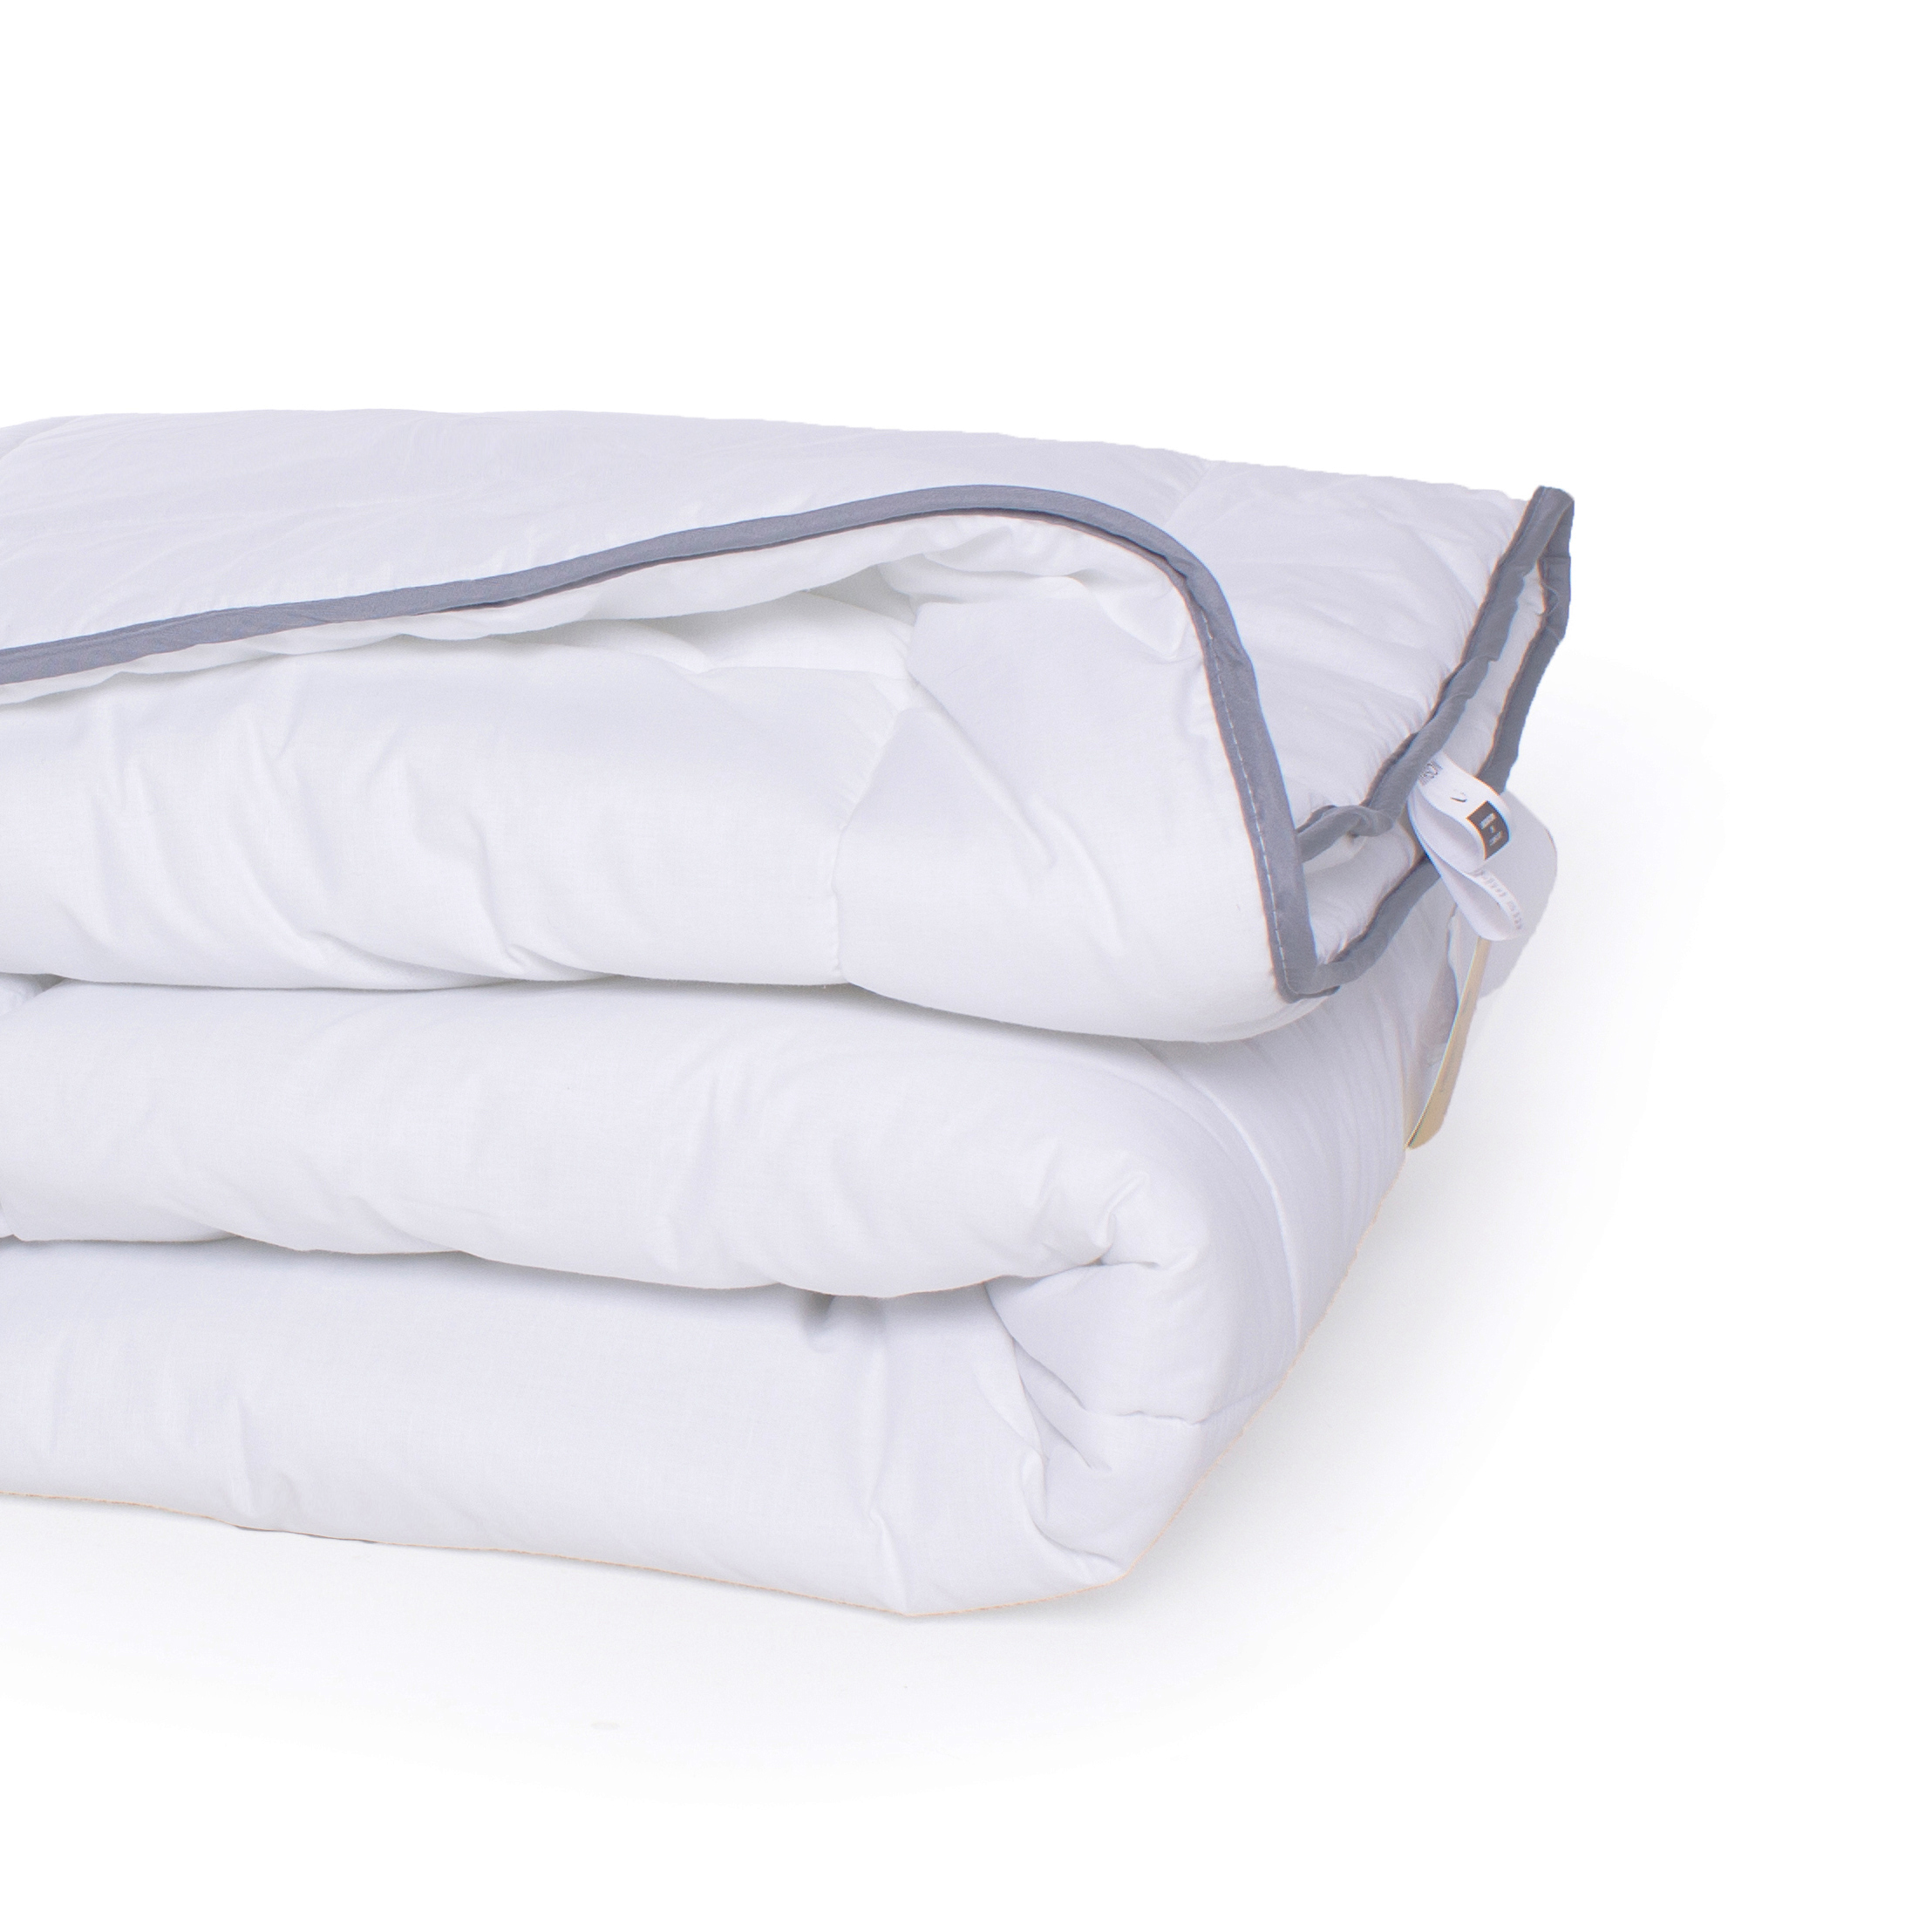 Одеяло шерстяное MirSon Royal №026, демисезонное, 155x215 см, белое - фото 4